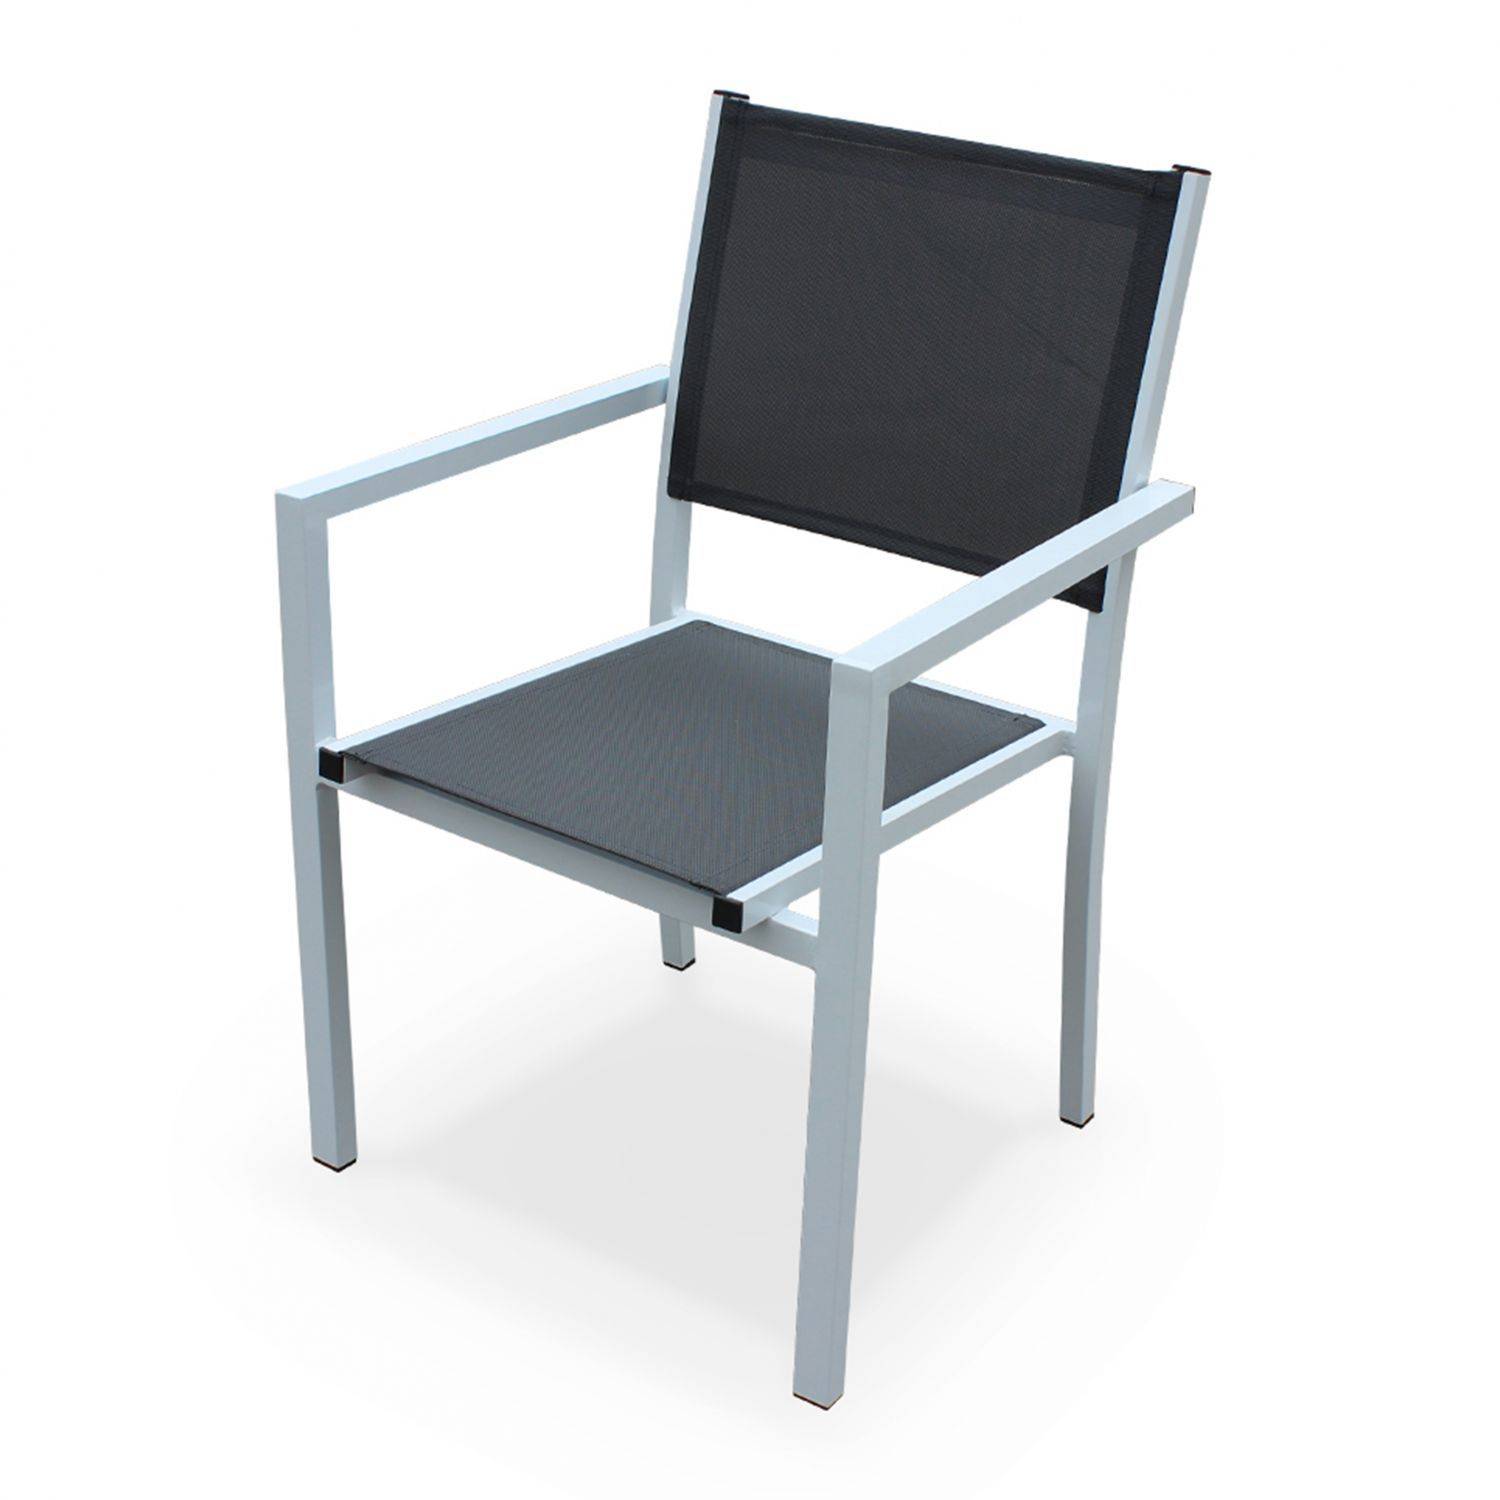 Gartengarnitur aus Aluminium und Textilene - Capua 180 cm - Weiß, Grau - 8 Plätze - 1 großer rechteckiger Tisch, 8 stapelbare Sessel Photo4